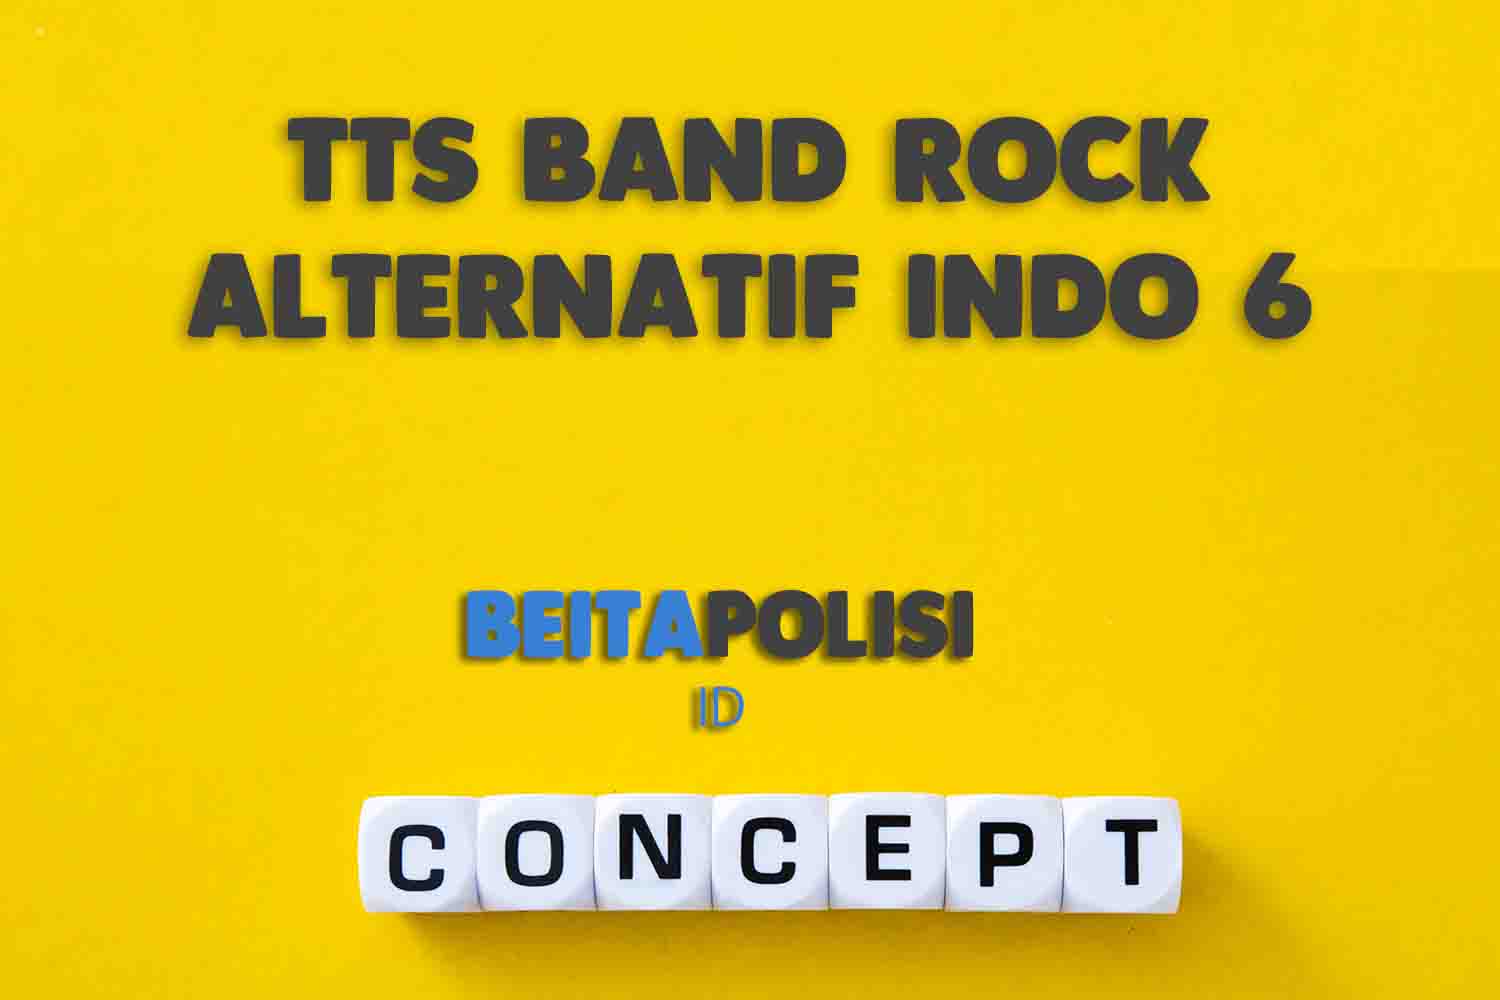 Tts Band Rock Alternatif Indo 6 Huruf Dari Jakarta 2009 4 Personil Adalah Berikut Jawaban Tebak Tebakan Tts